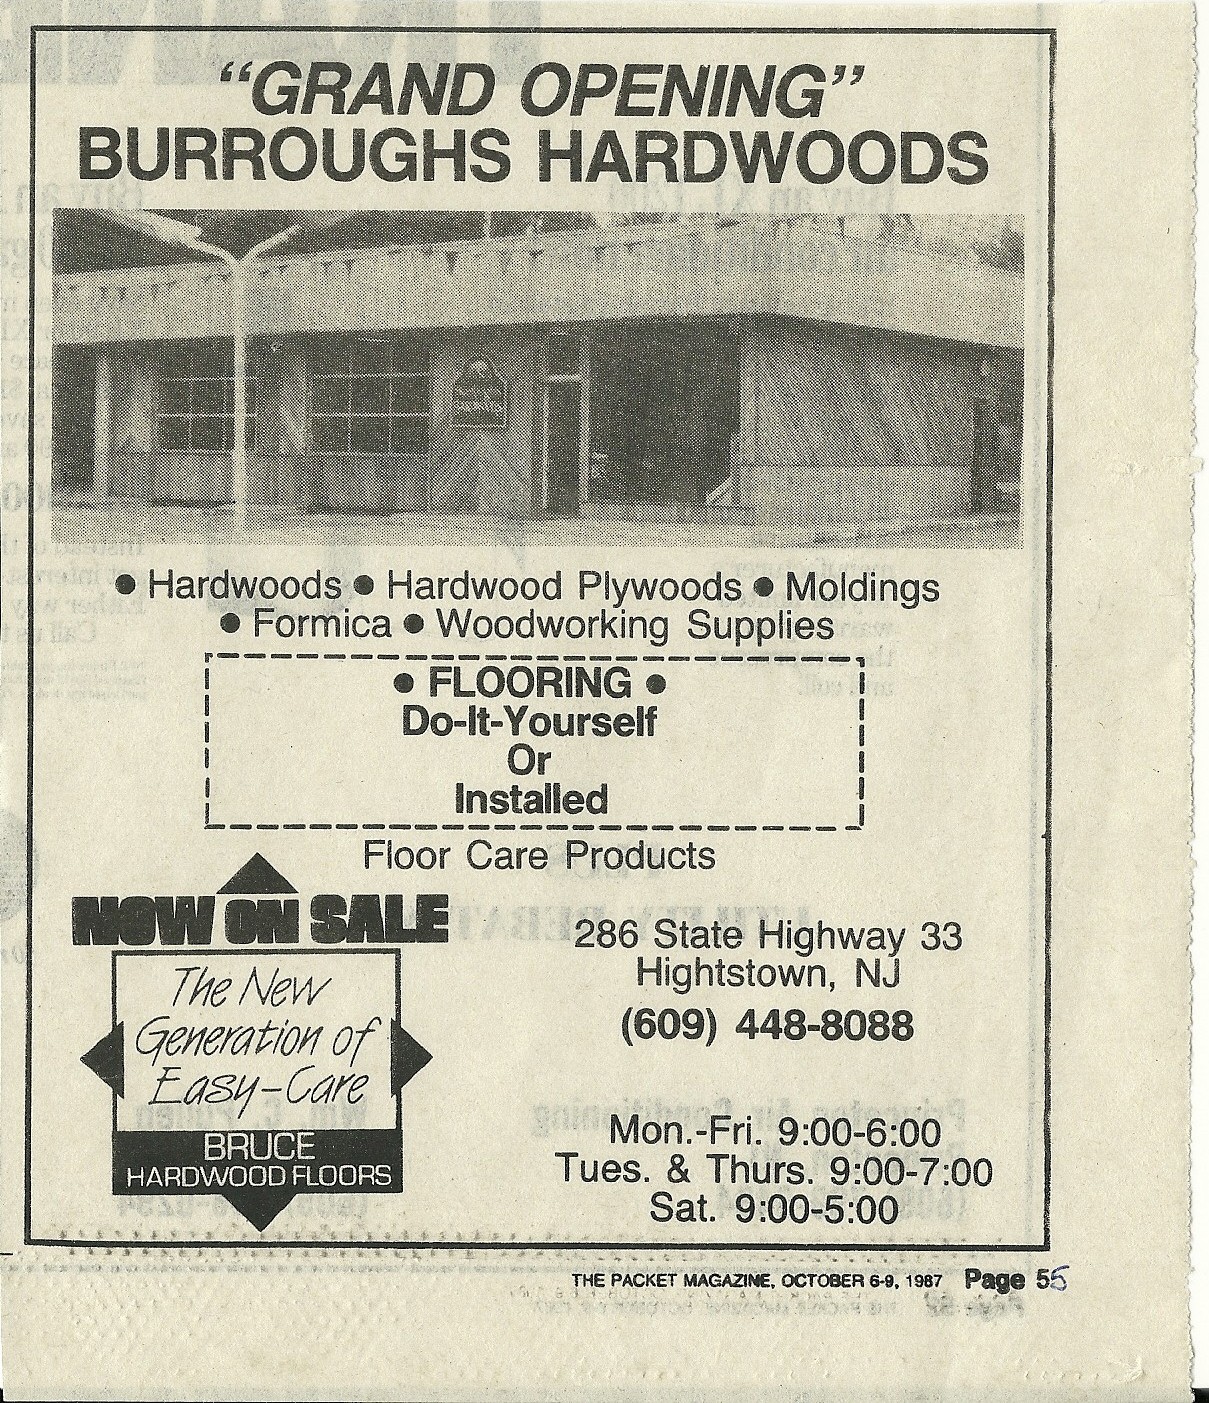 Burroughs Hardwoods Grand Opening